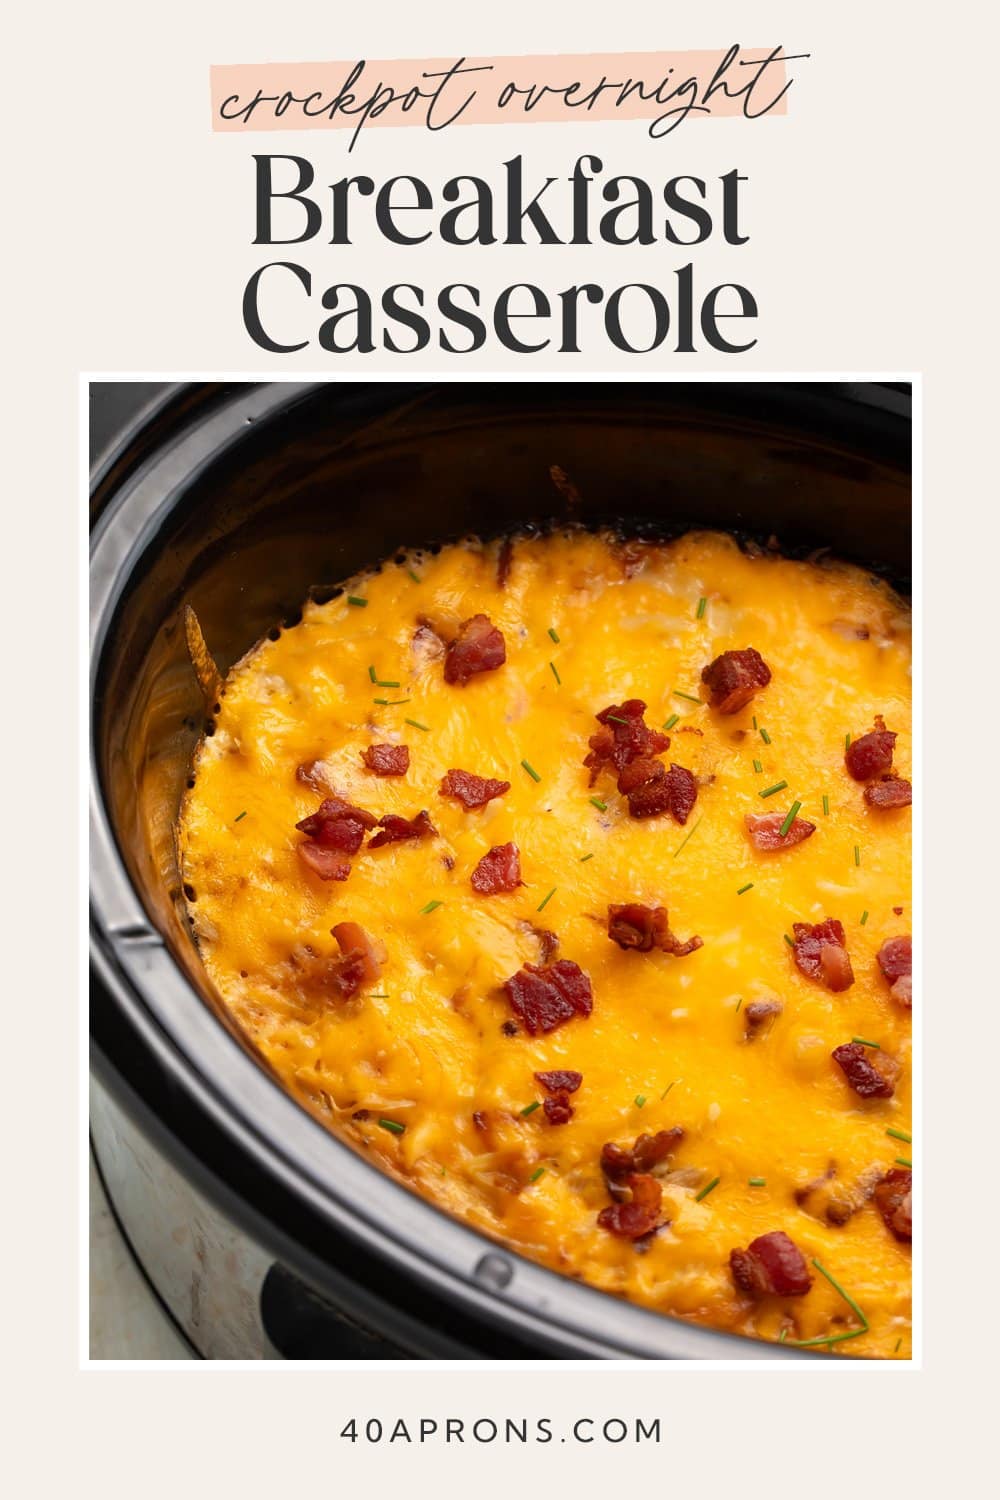 Pin graphic for Crockpot breakfast casserole.